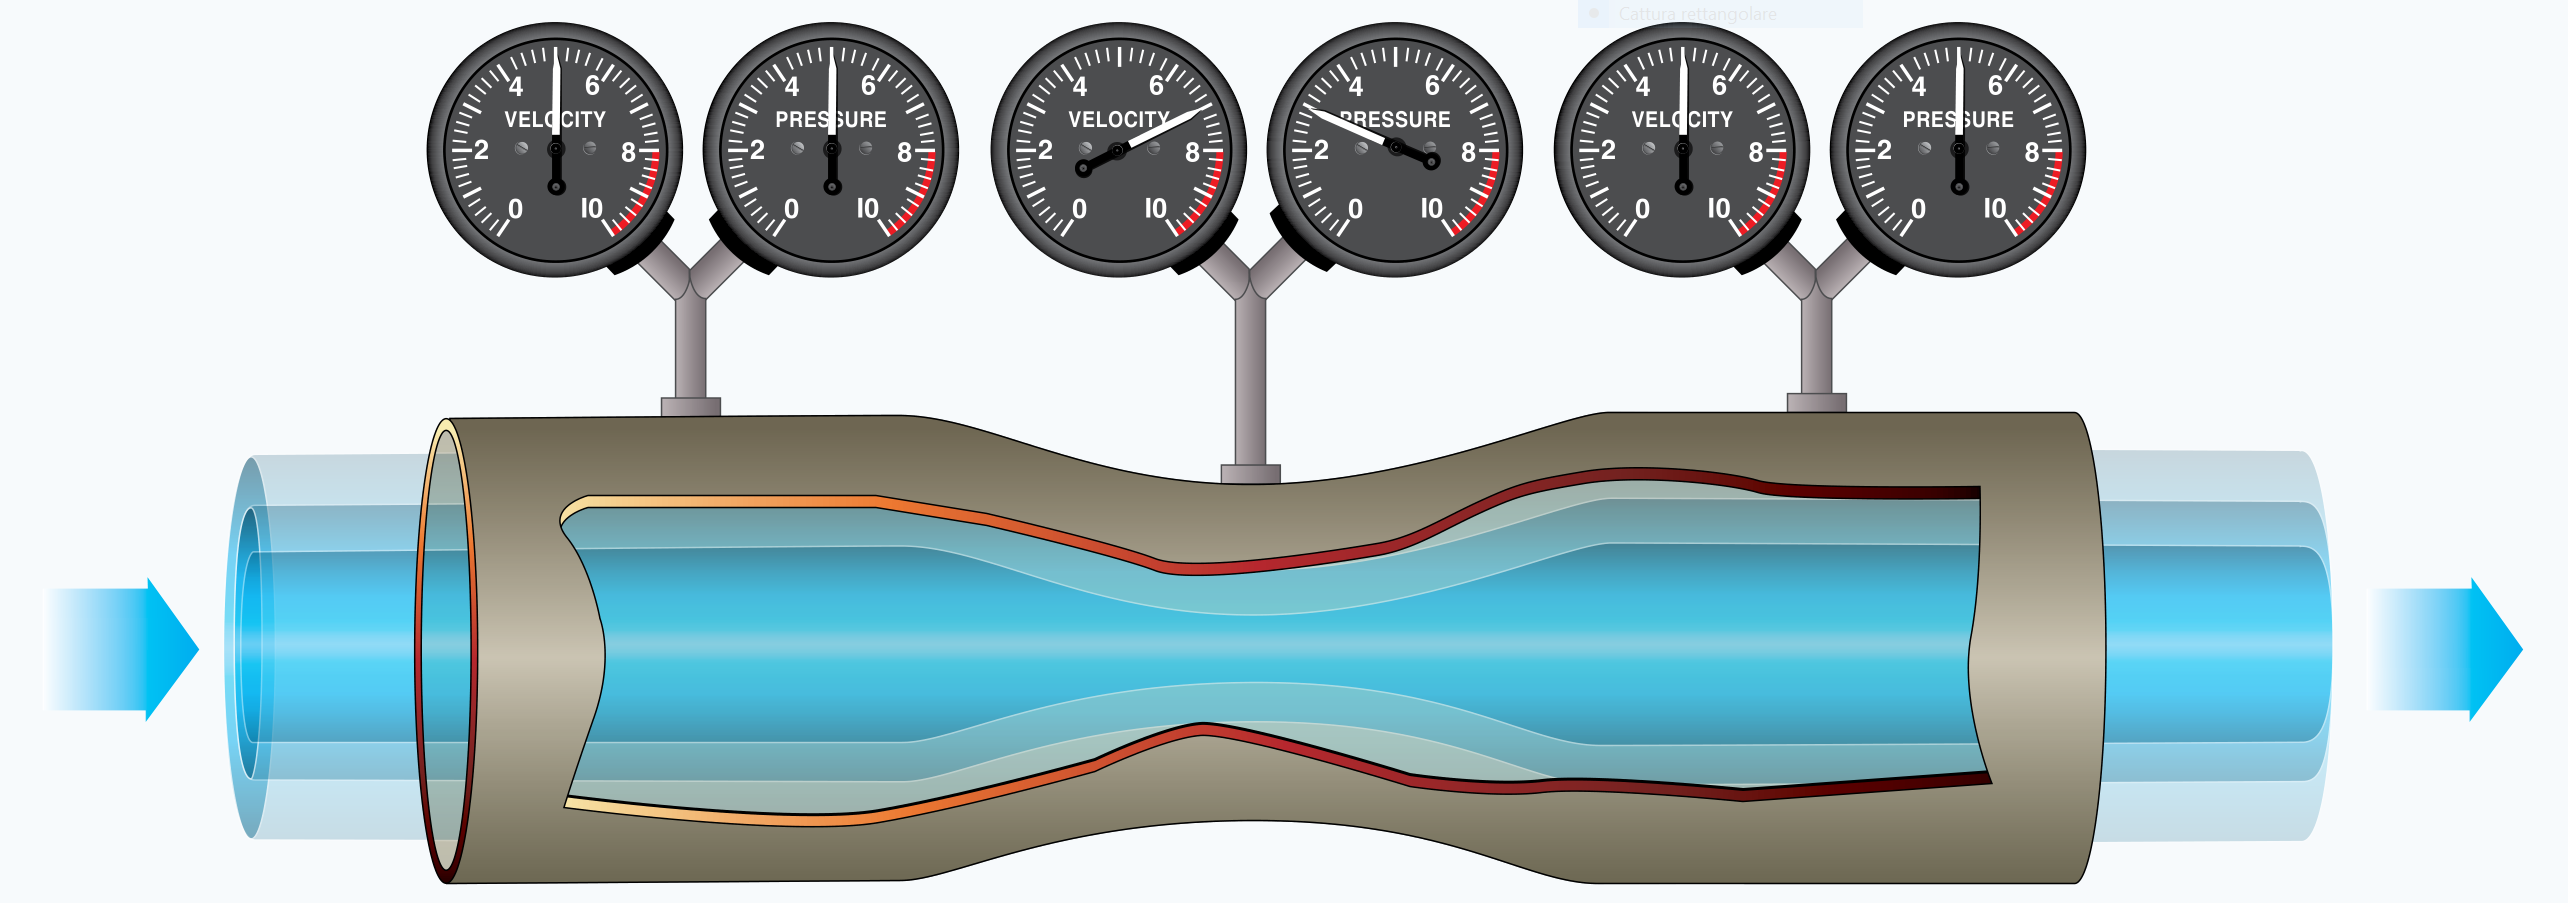 Air flow and pressure in a venturi tube.